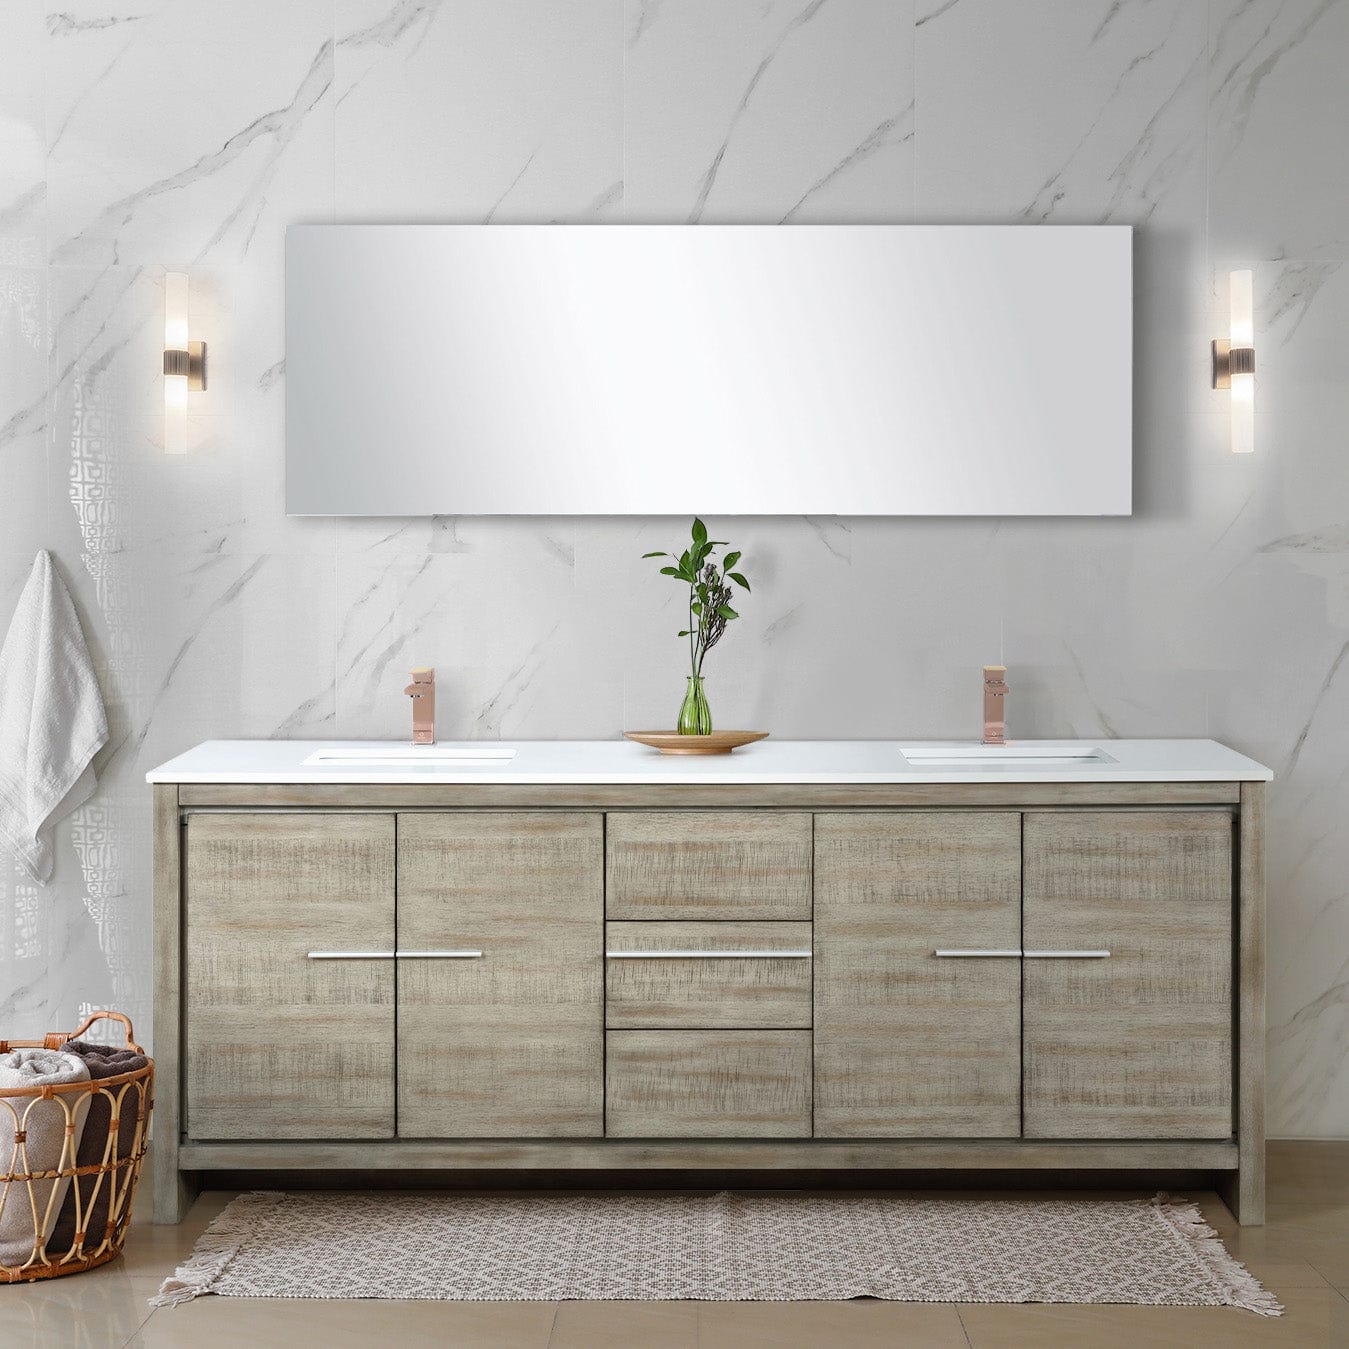 Lexora Bathroom Vanity Cultured Marble / Rose Gold Faucet / No Mirror Lafarre 80" Rustic Acacia Double Bathroom Vanity